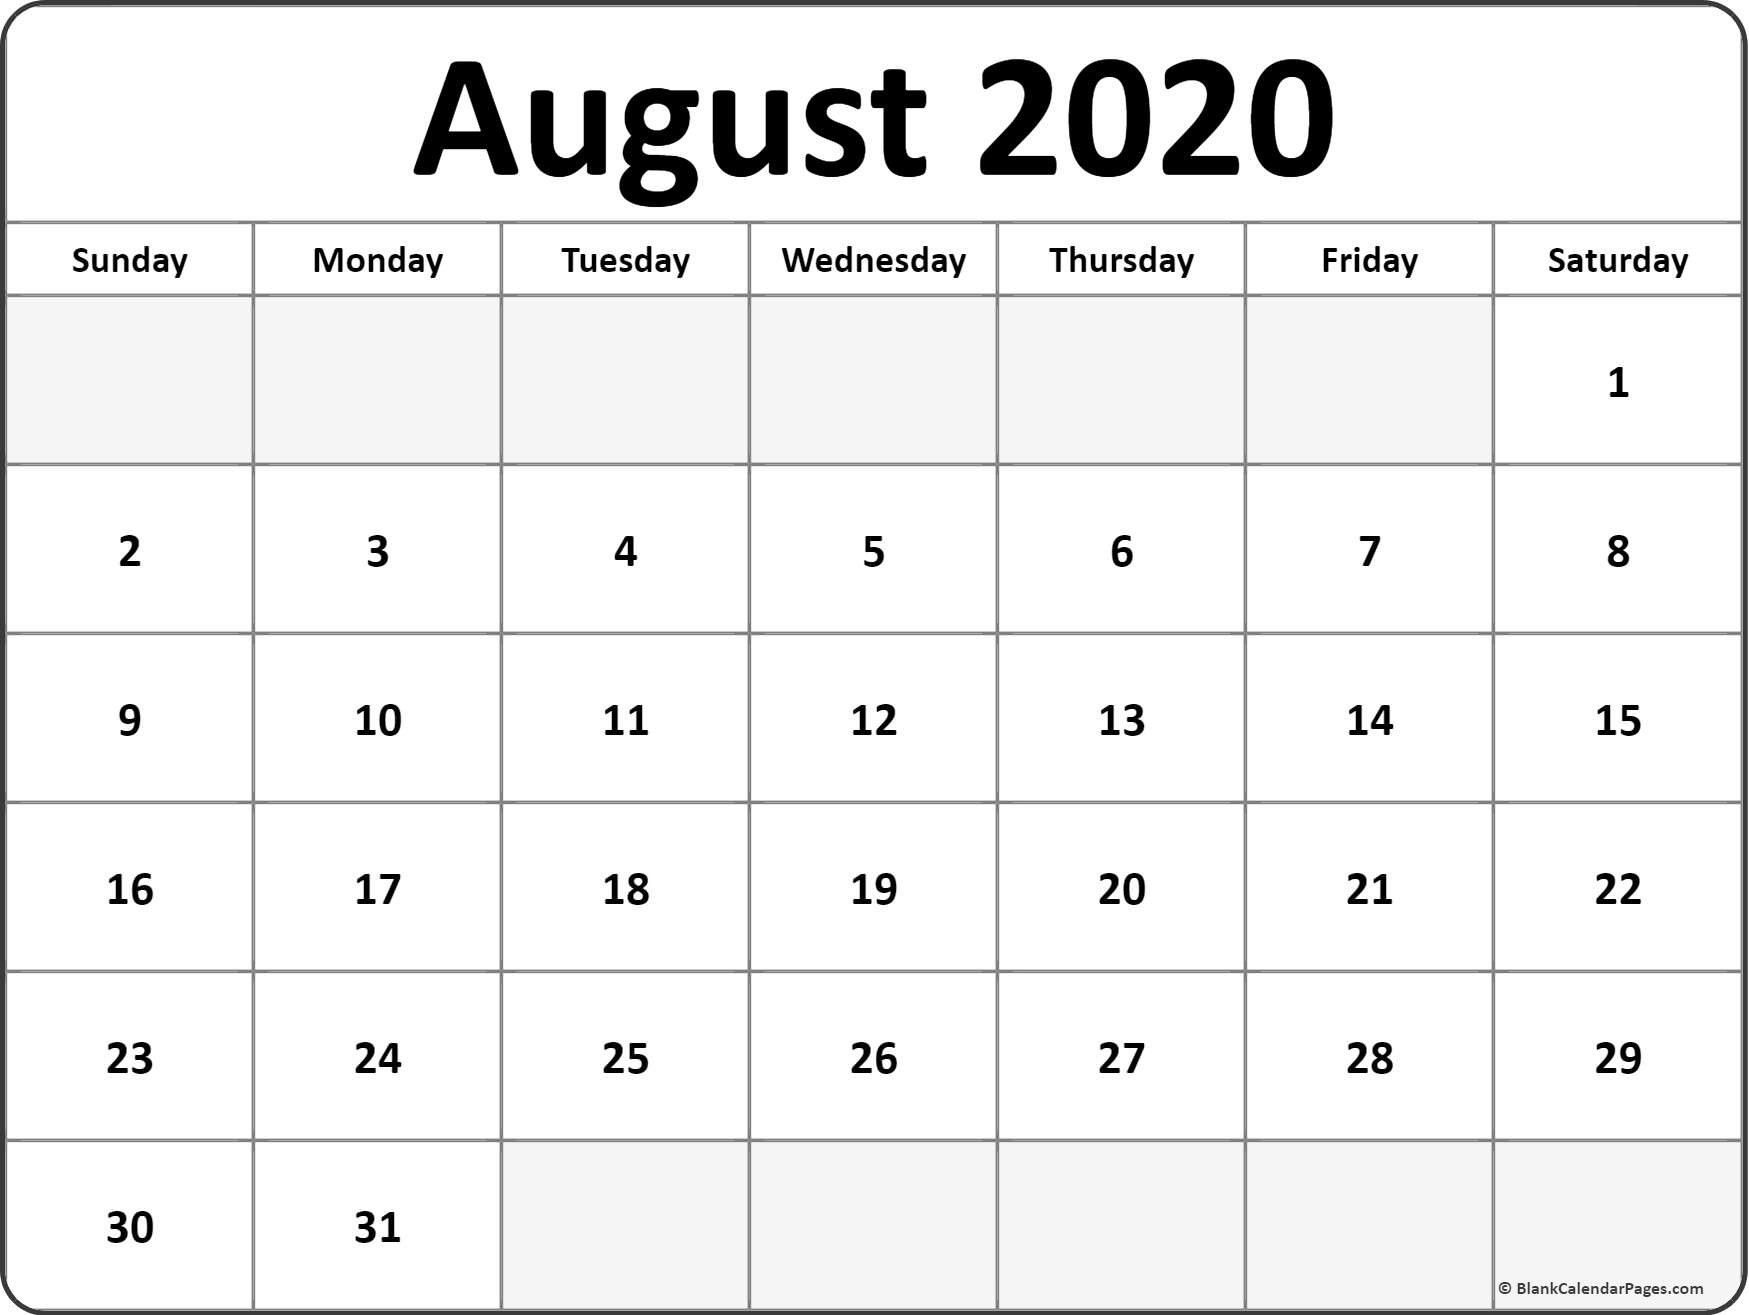 August 2020 Calendar August 2020 Blank Calendar Templates with 2020 Blank Calendar Pages